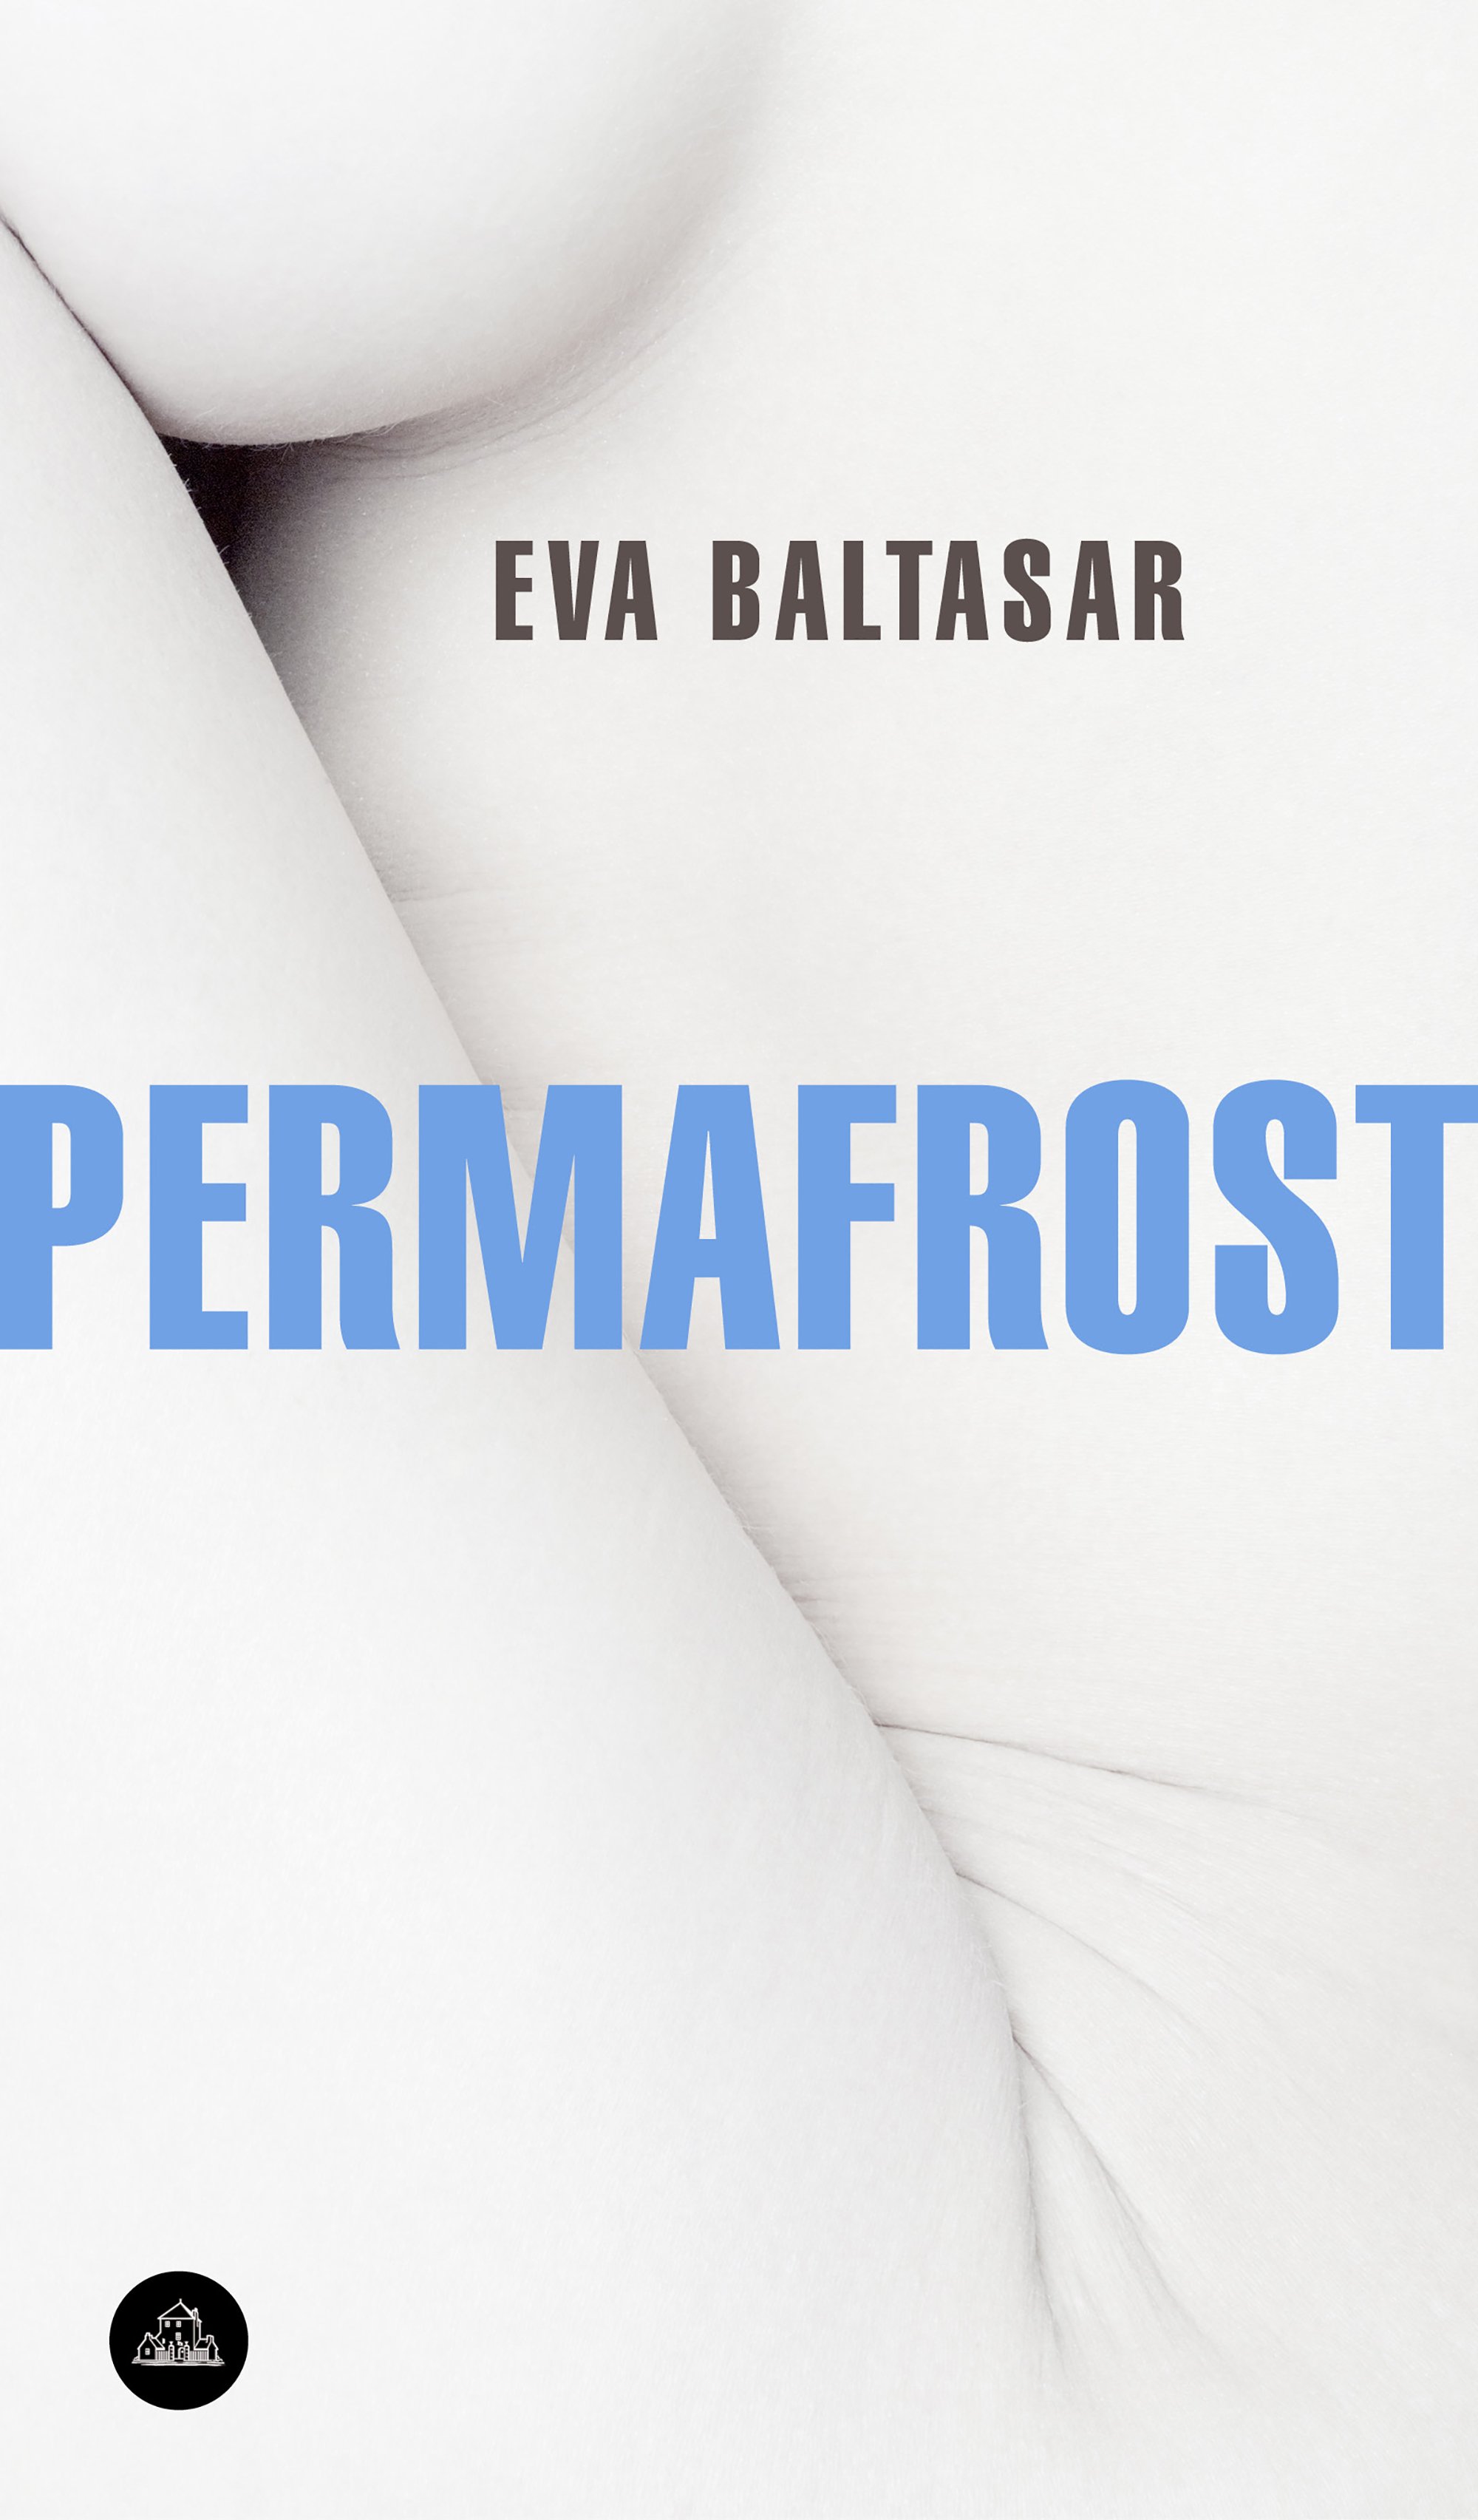 Zenda recomienda: Permafrost, de Eva Baltasar